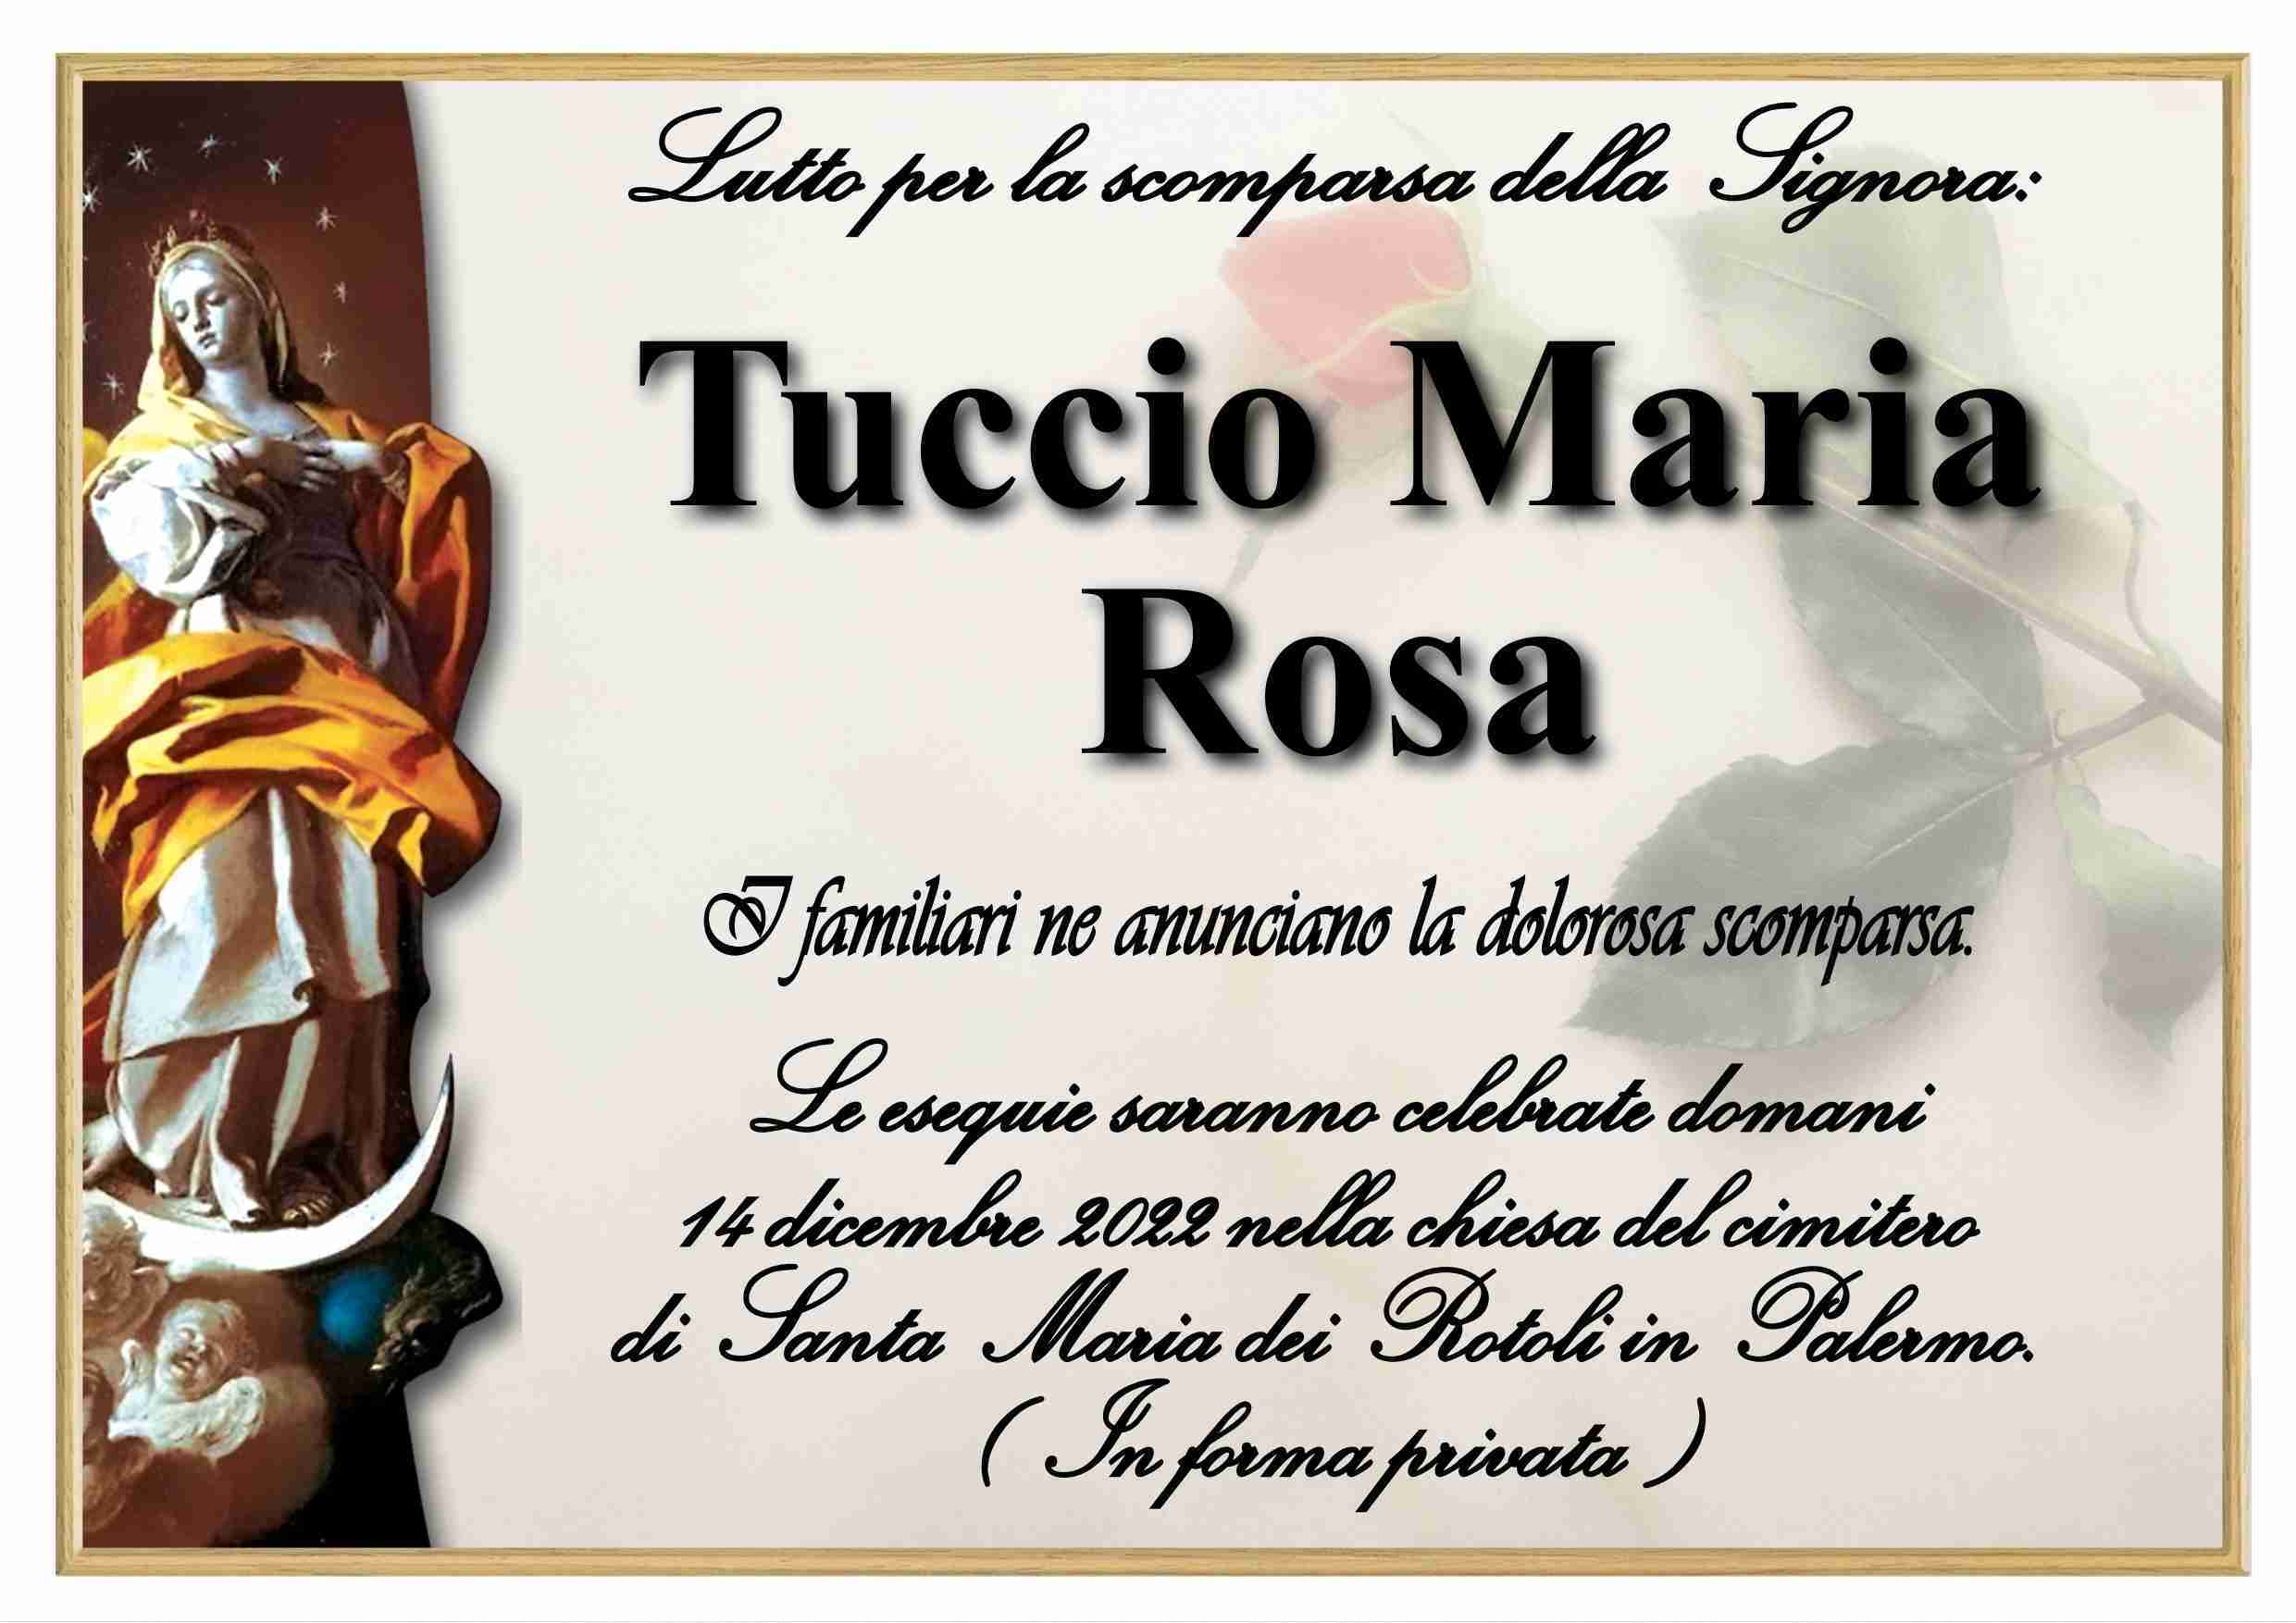 Maria Rosa Tuccio